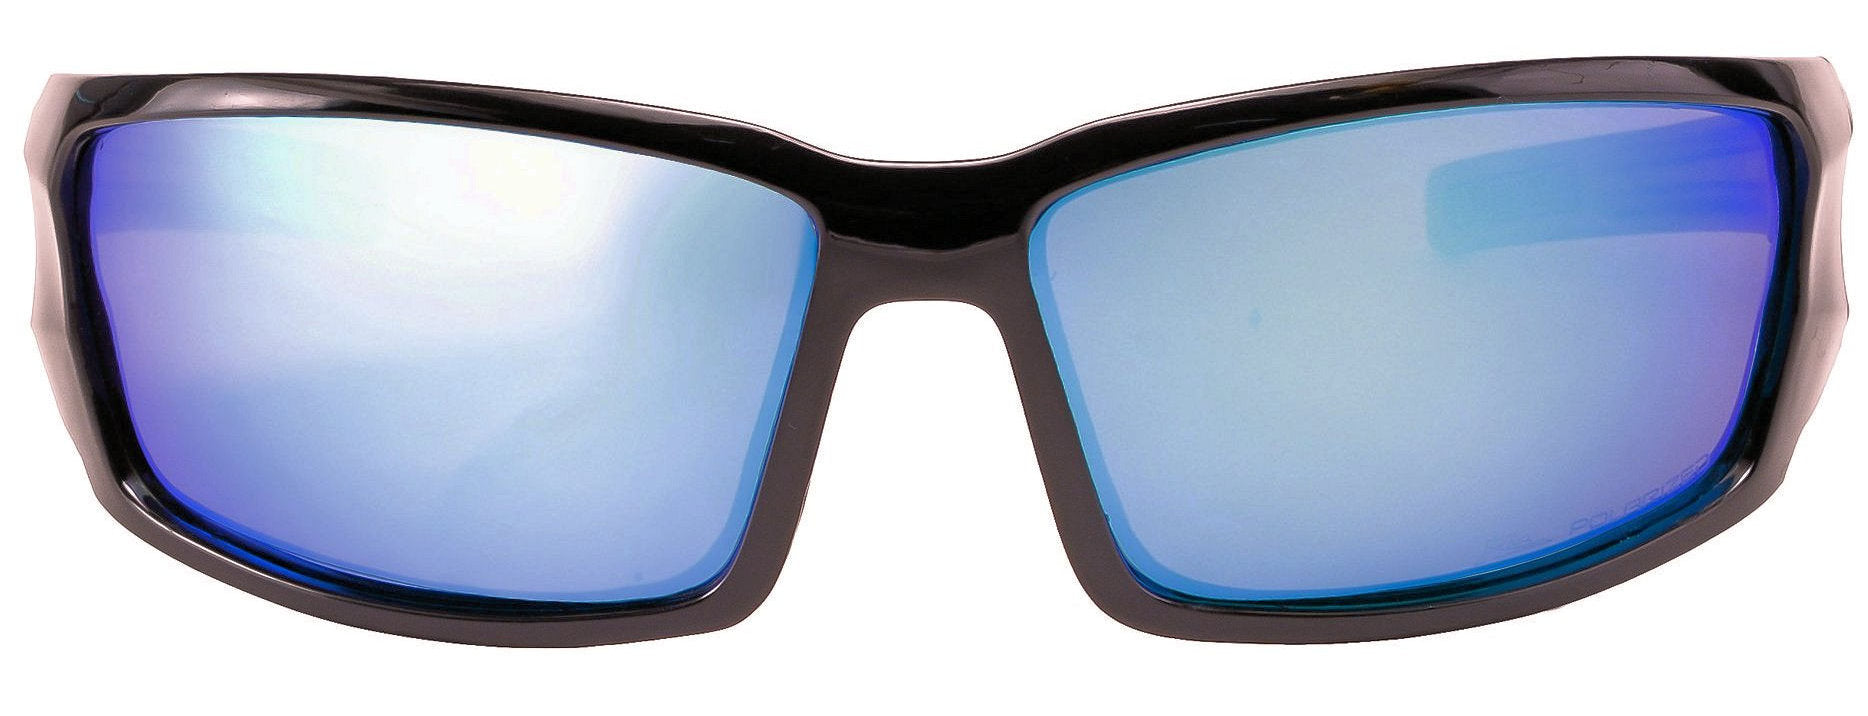 Second image: Polarized Sunglasses for Men - Premium Sport Sunglasses - HZ Series Aquabull - Black Frame - Ice Blue Mirror Lens